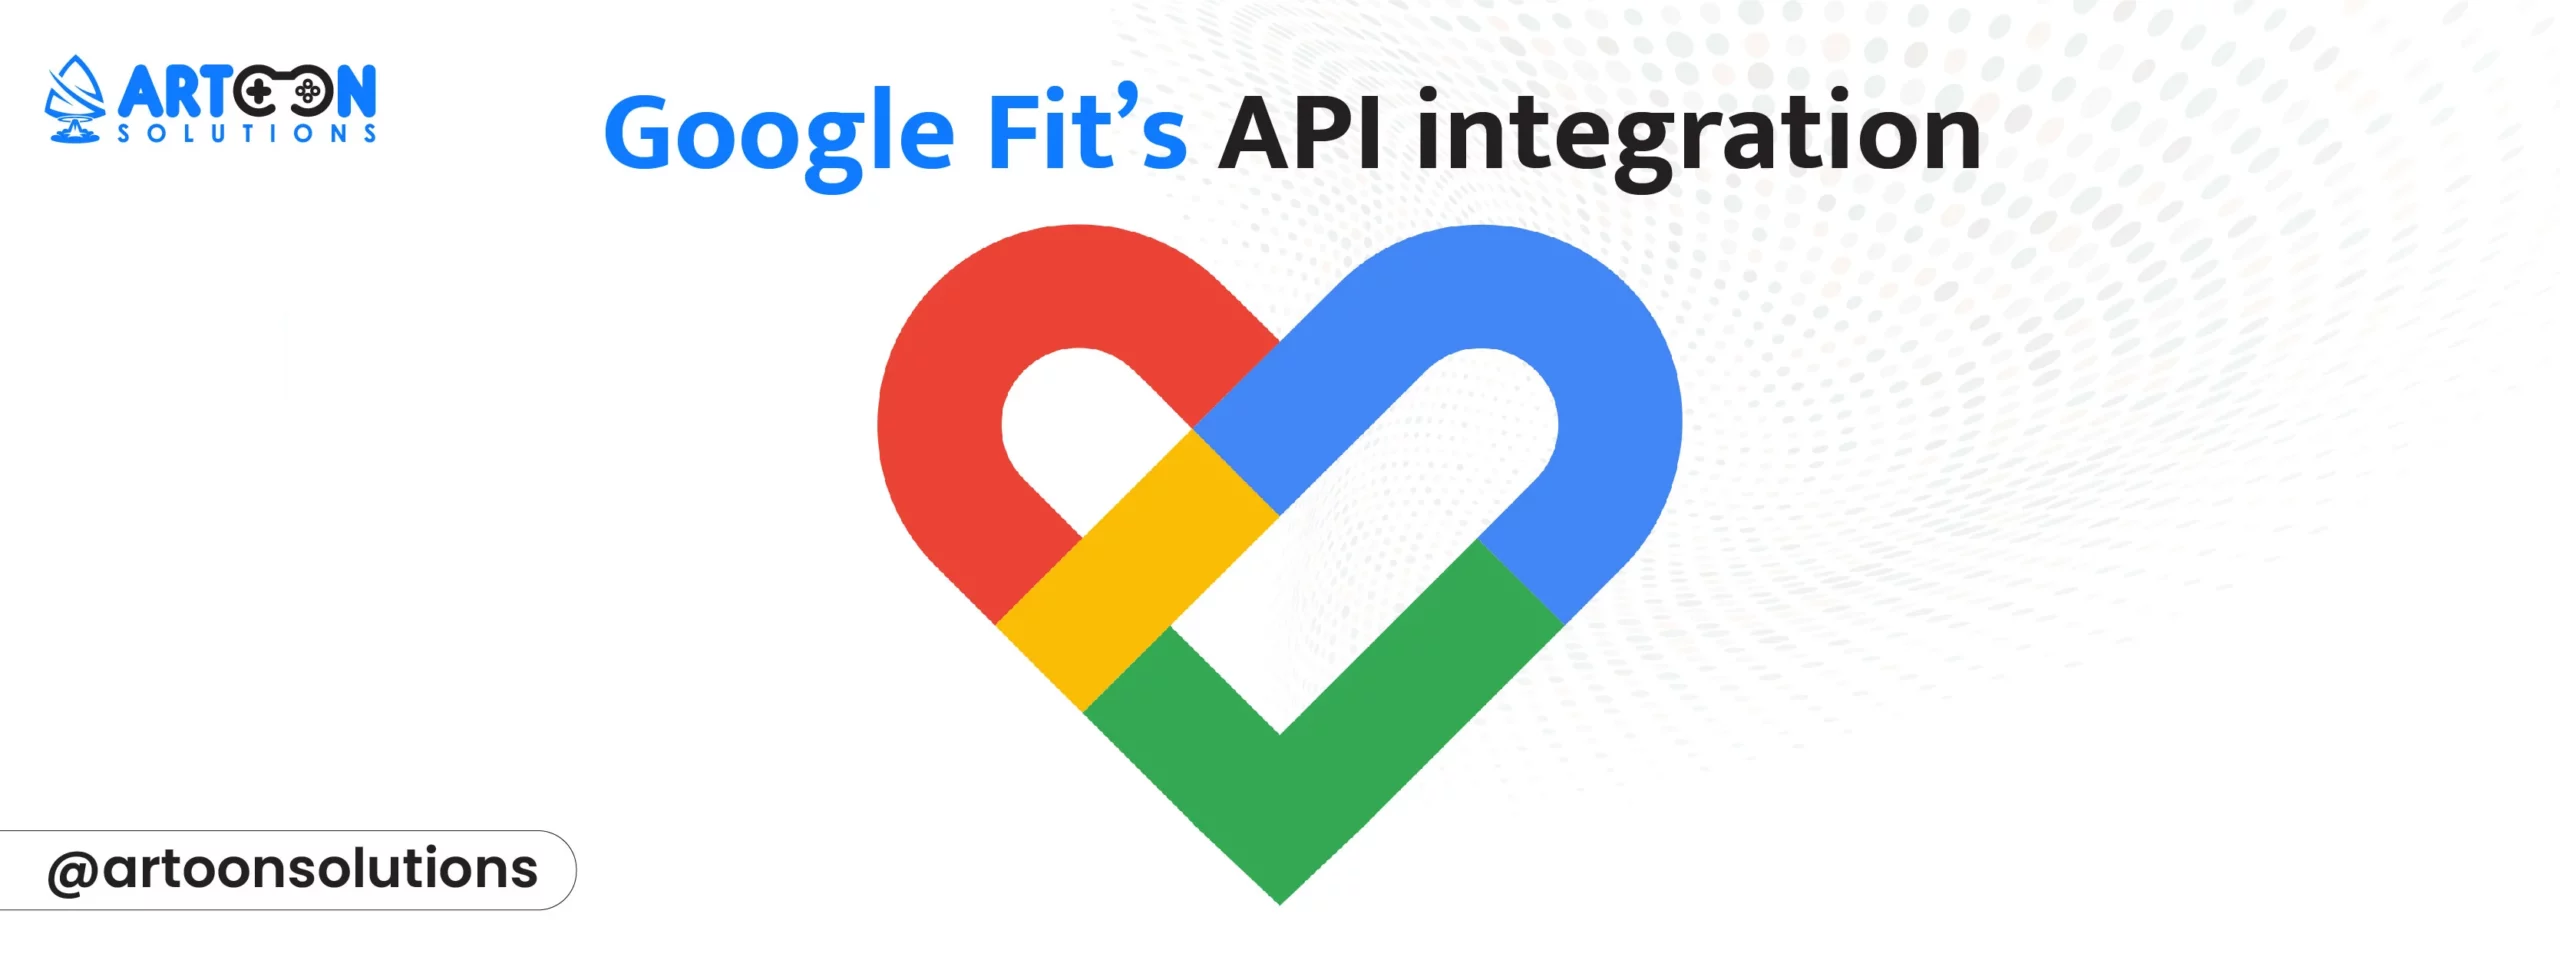 Google Fit’s API integration